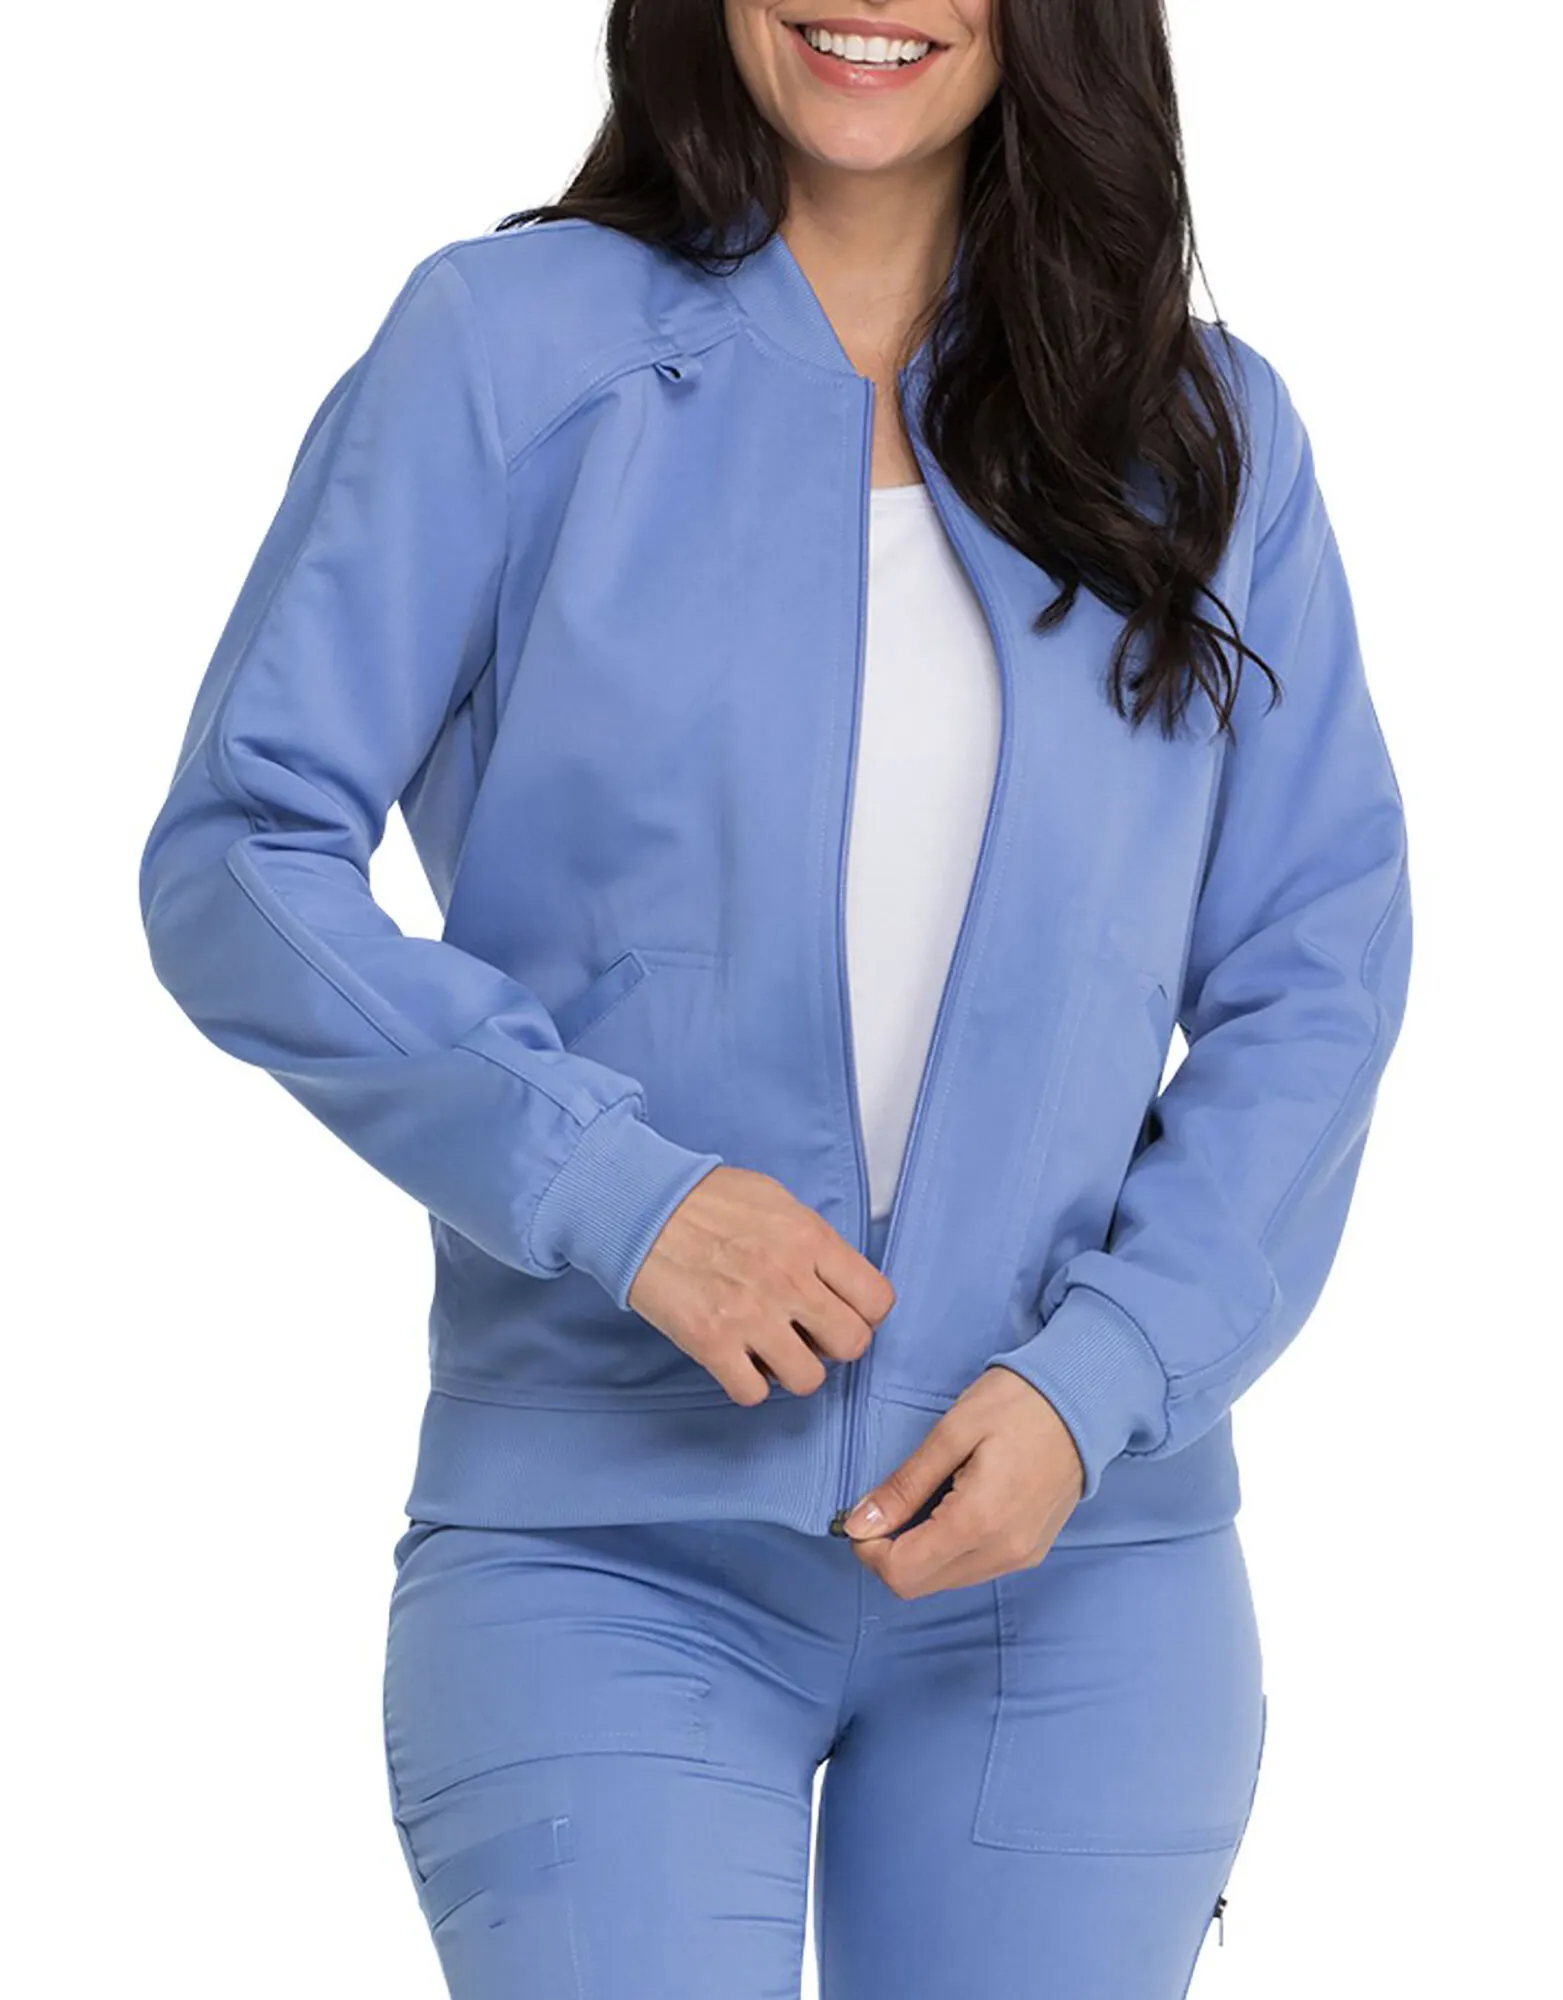 Fabricantes atacado moda esfrega topos baratos esfregão médica corridas uniforme enfermagem esfrega jaqueta